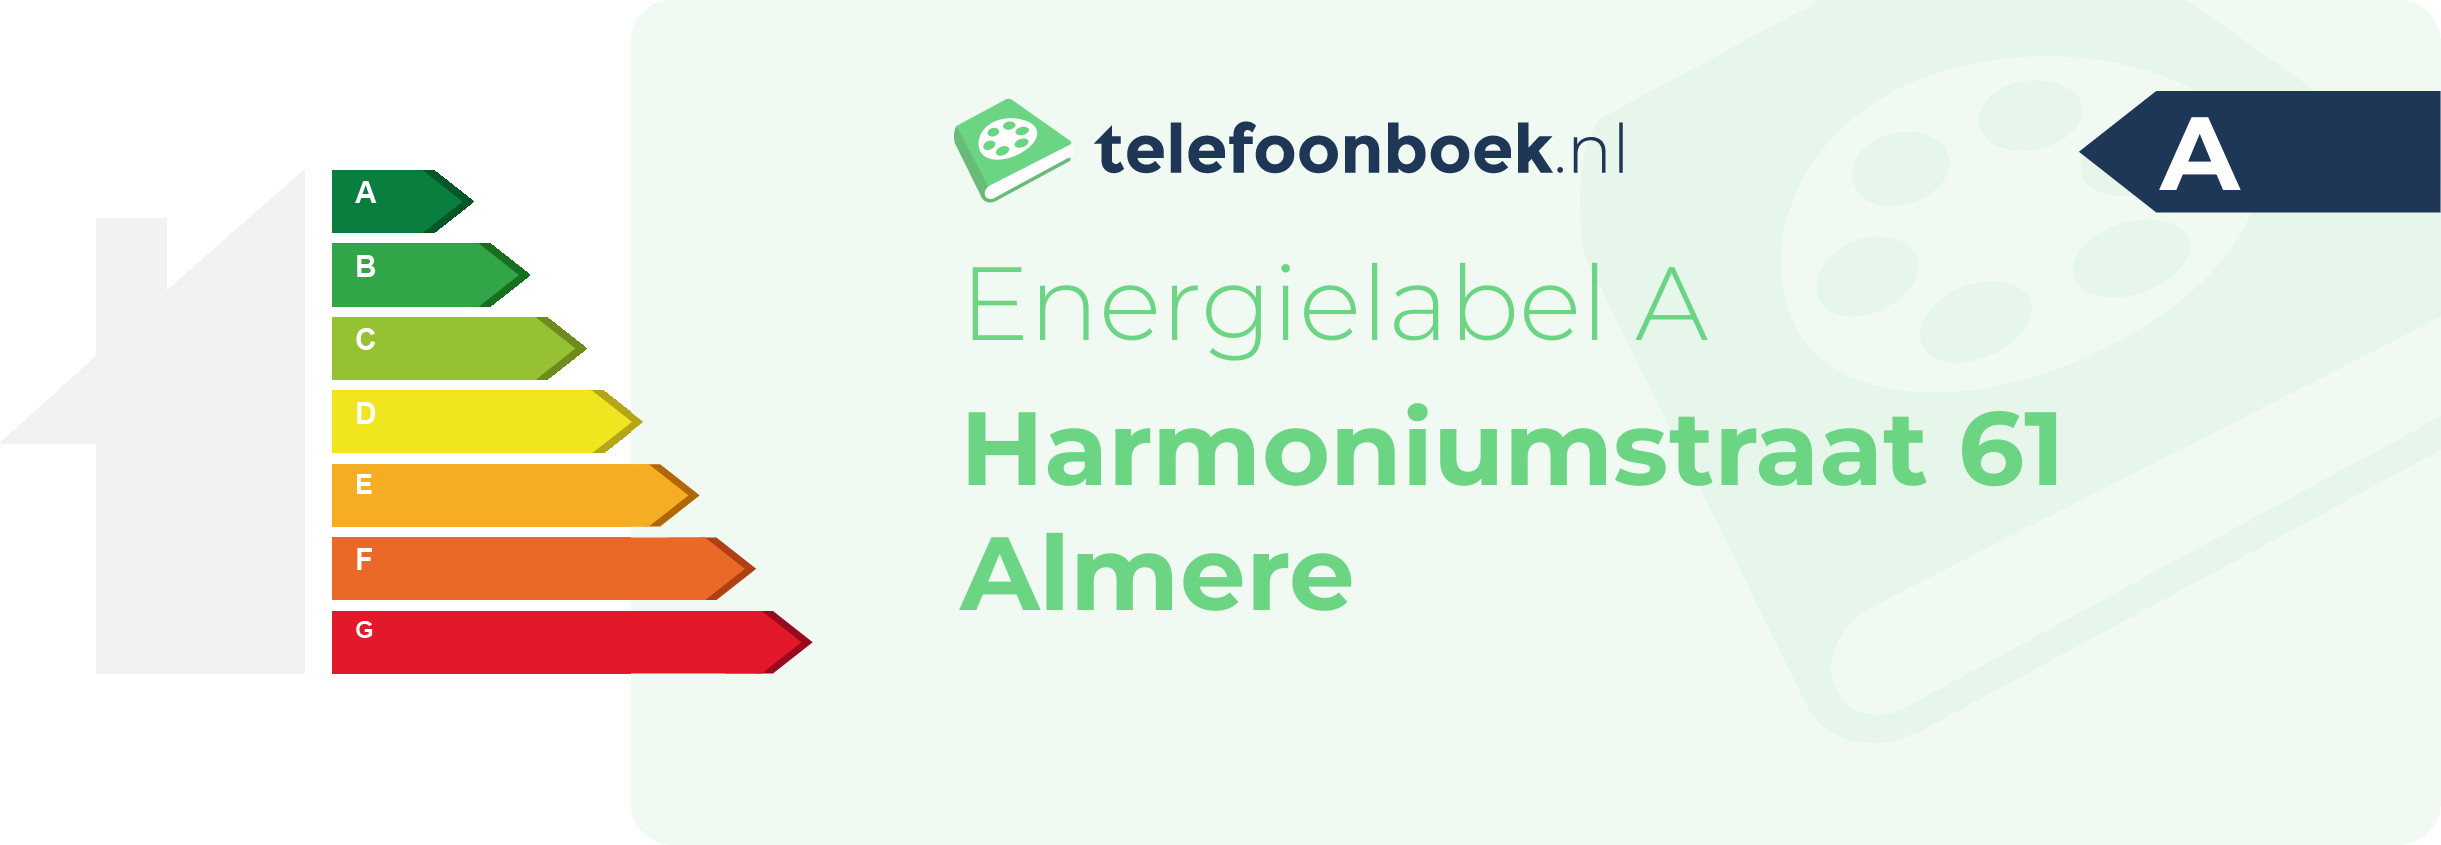 Energielabel Harmoniumstraat 61 Almere